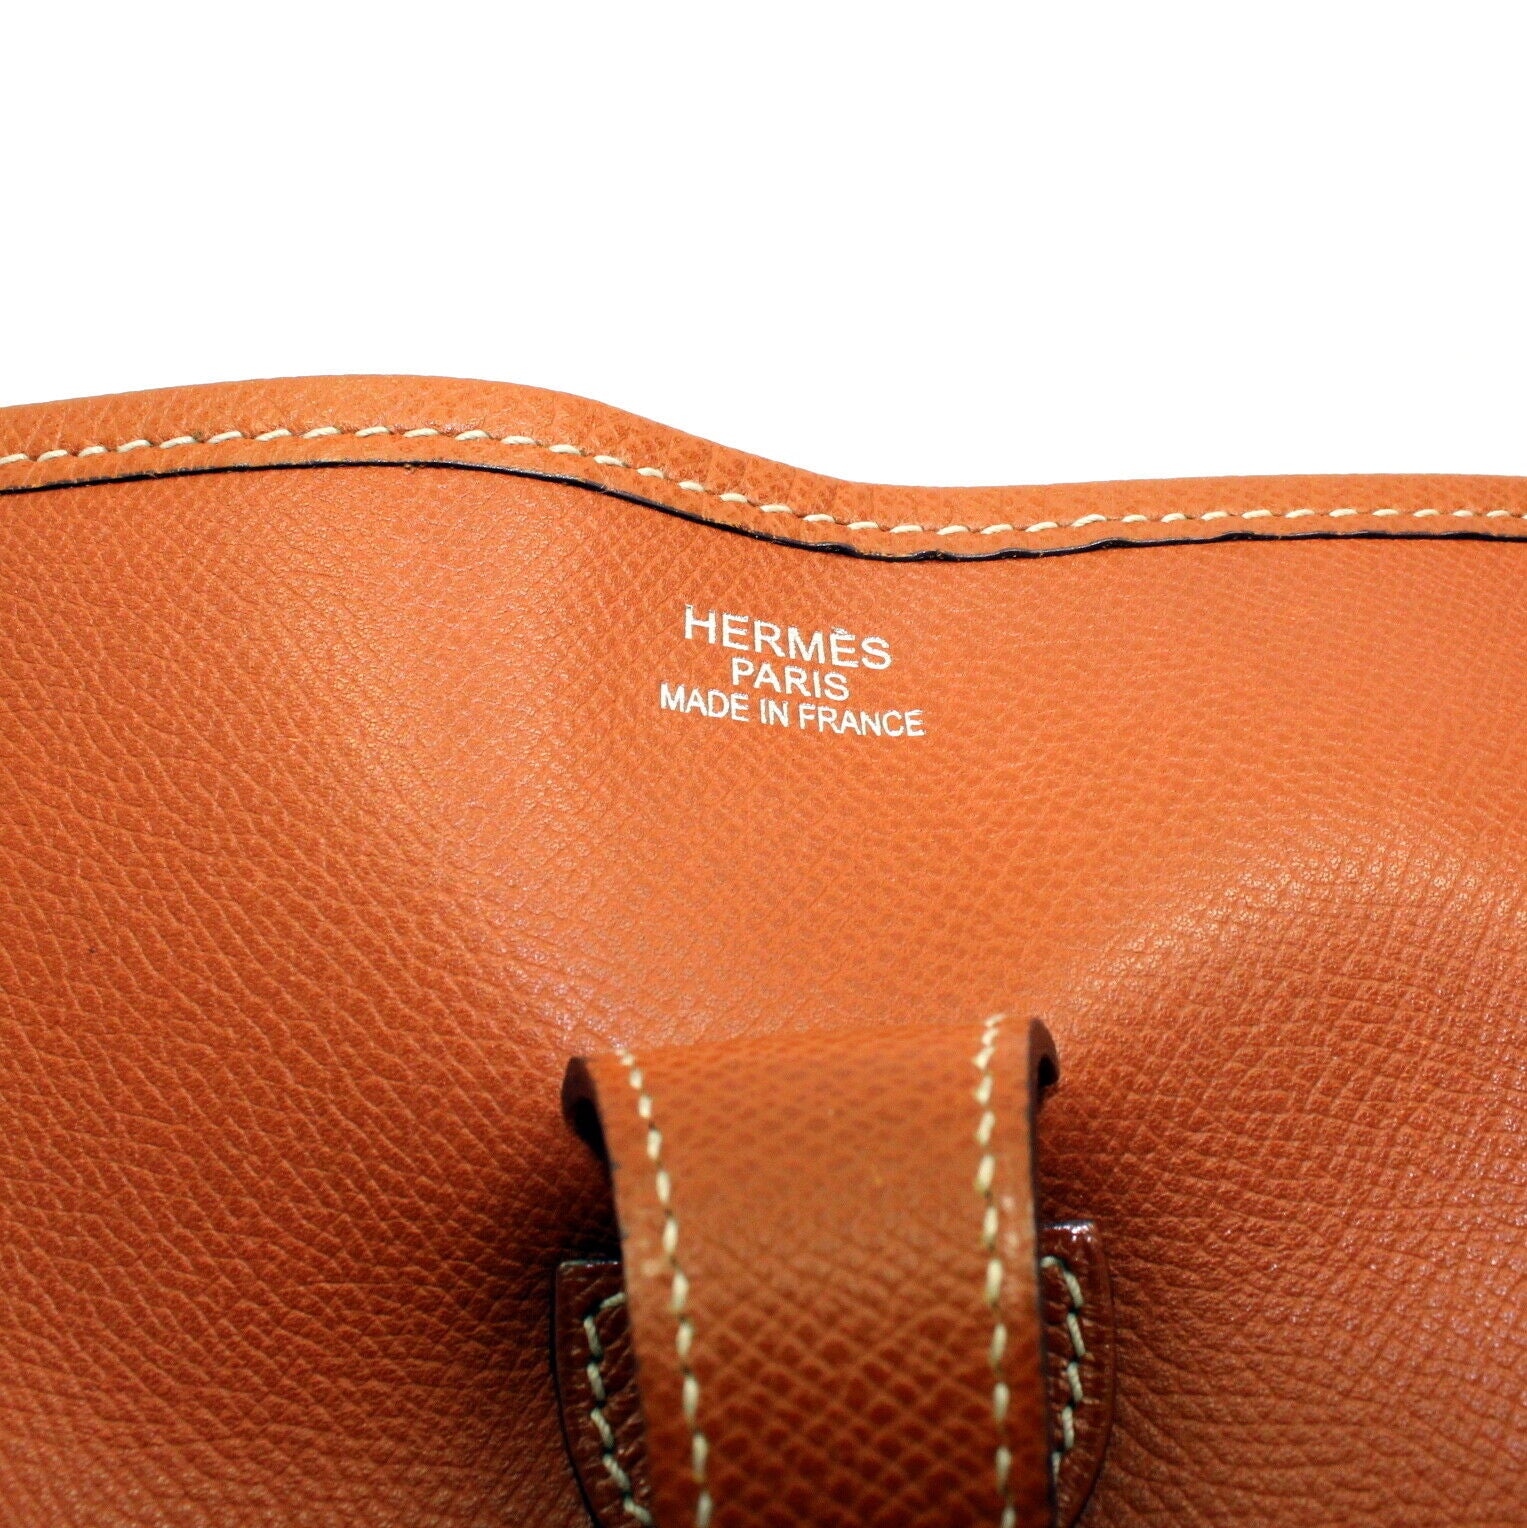 Buy Authentic Hermes Bags